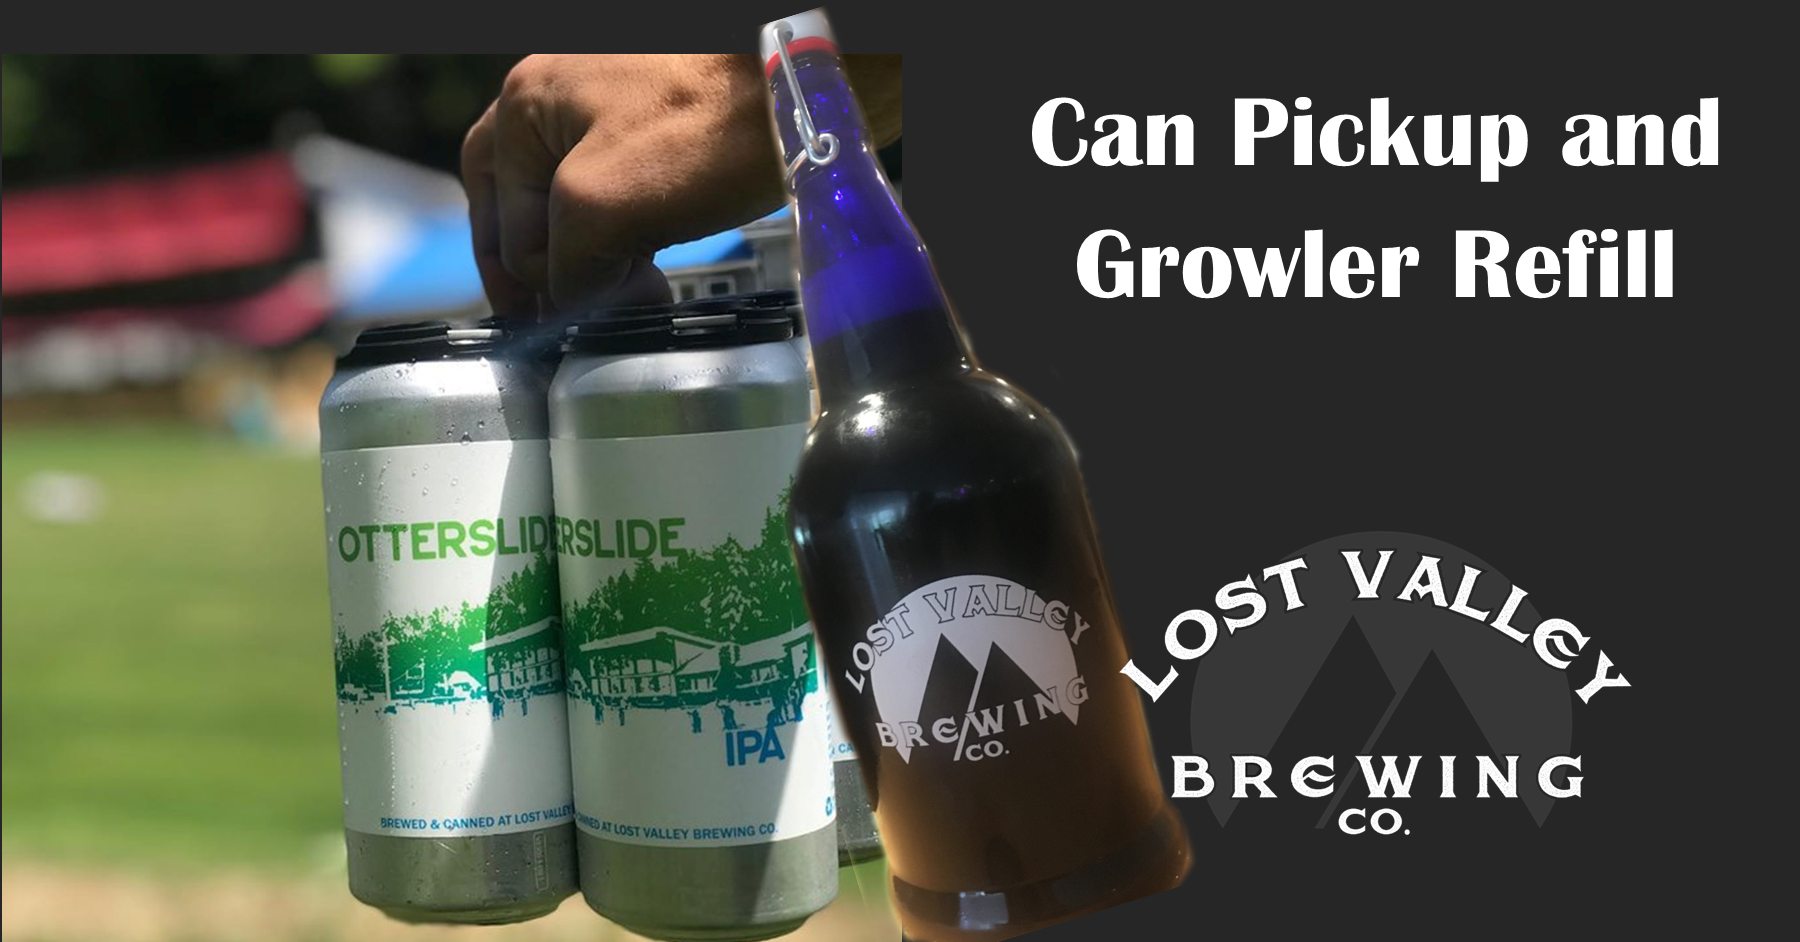 Lost Valley Beer